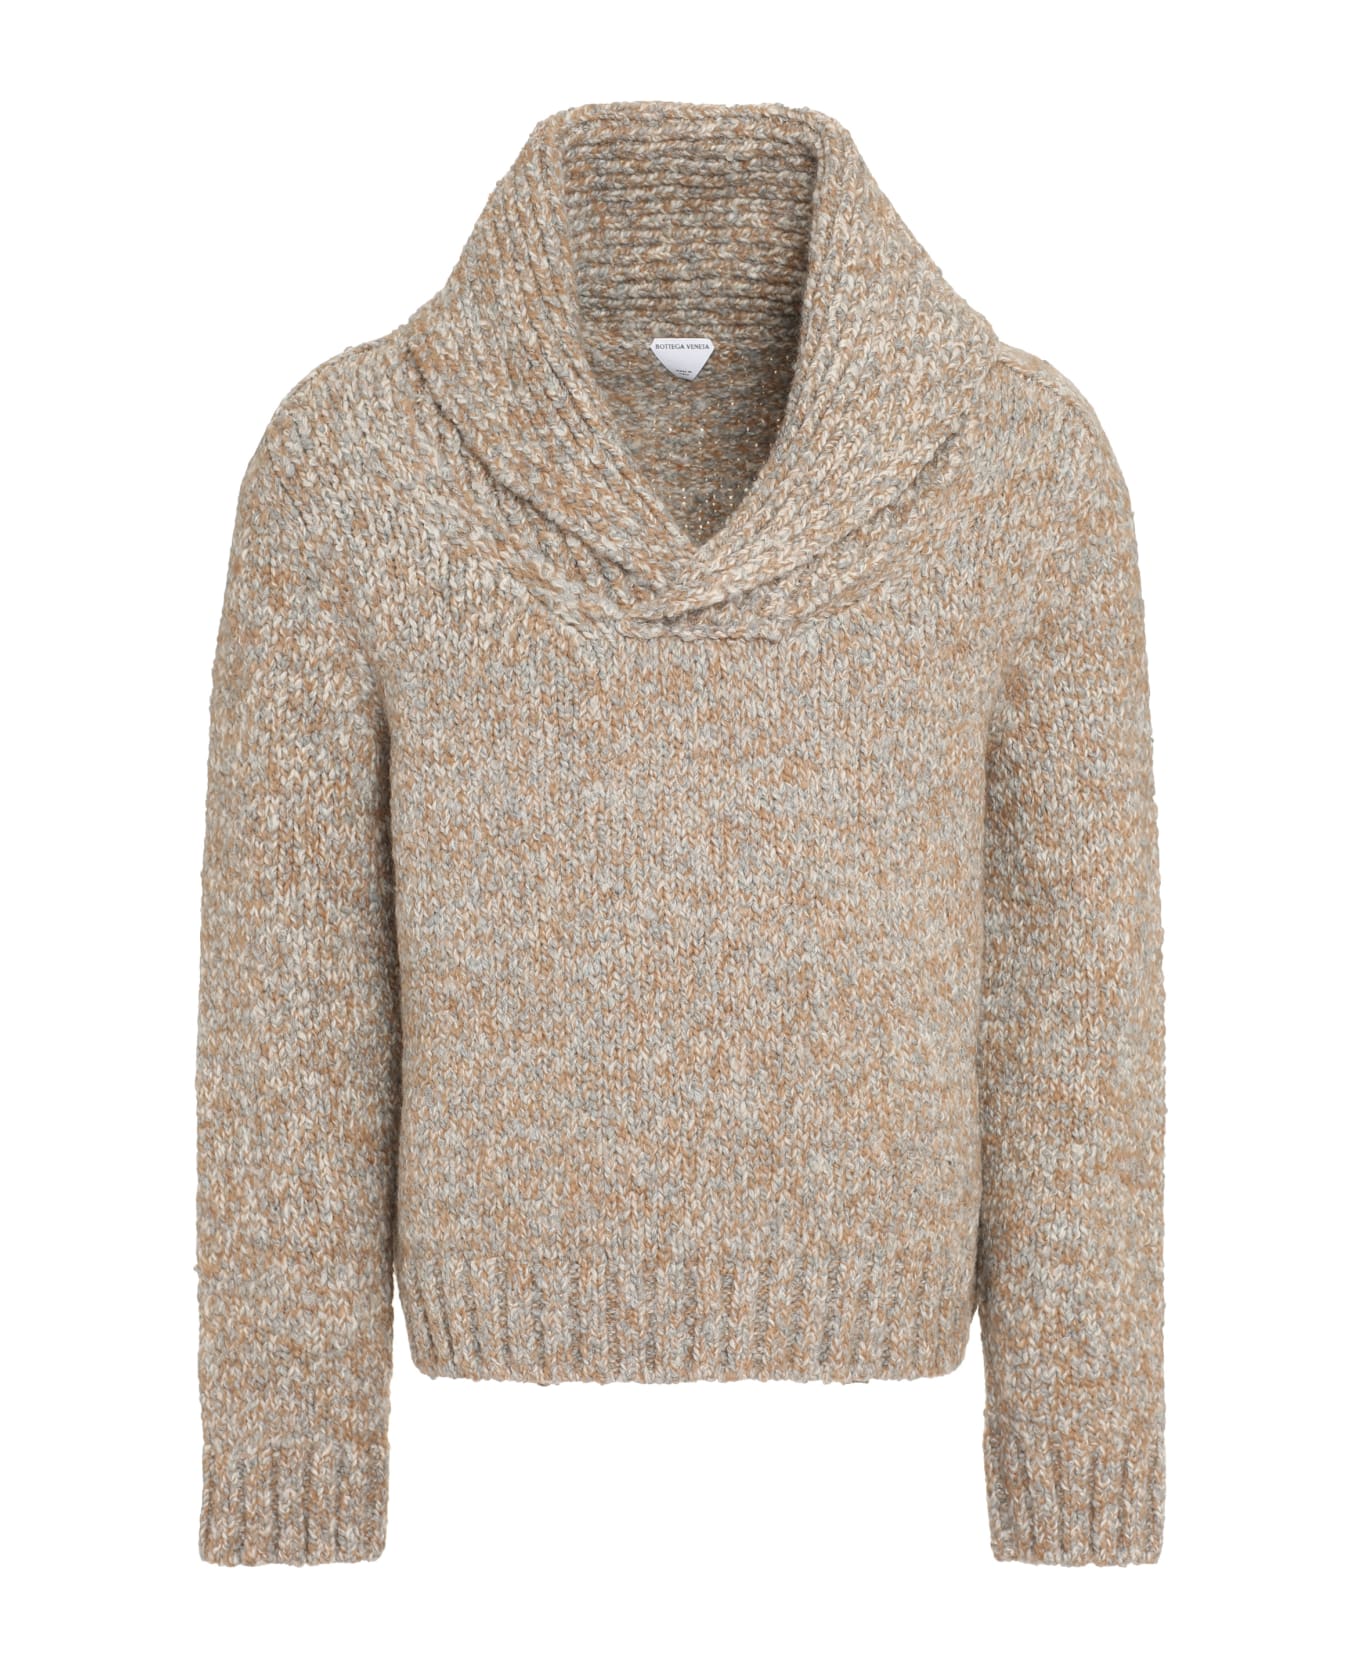 Bottega Veneta Wool Blend Sweater - Beige